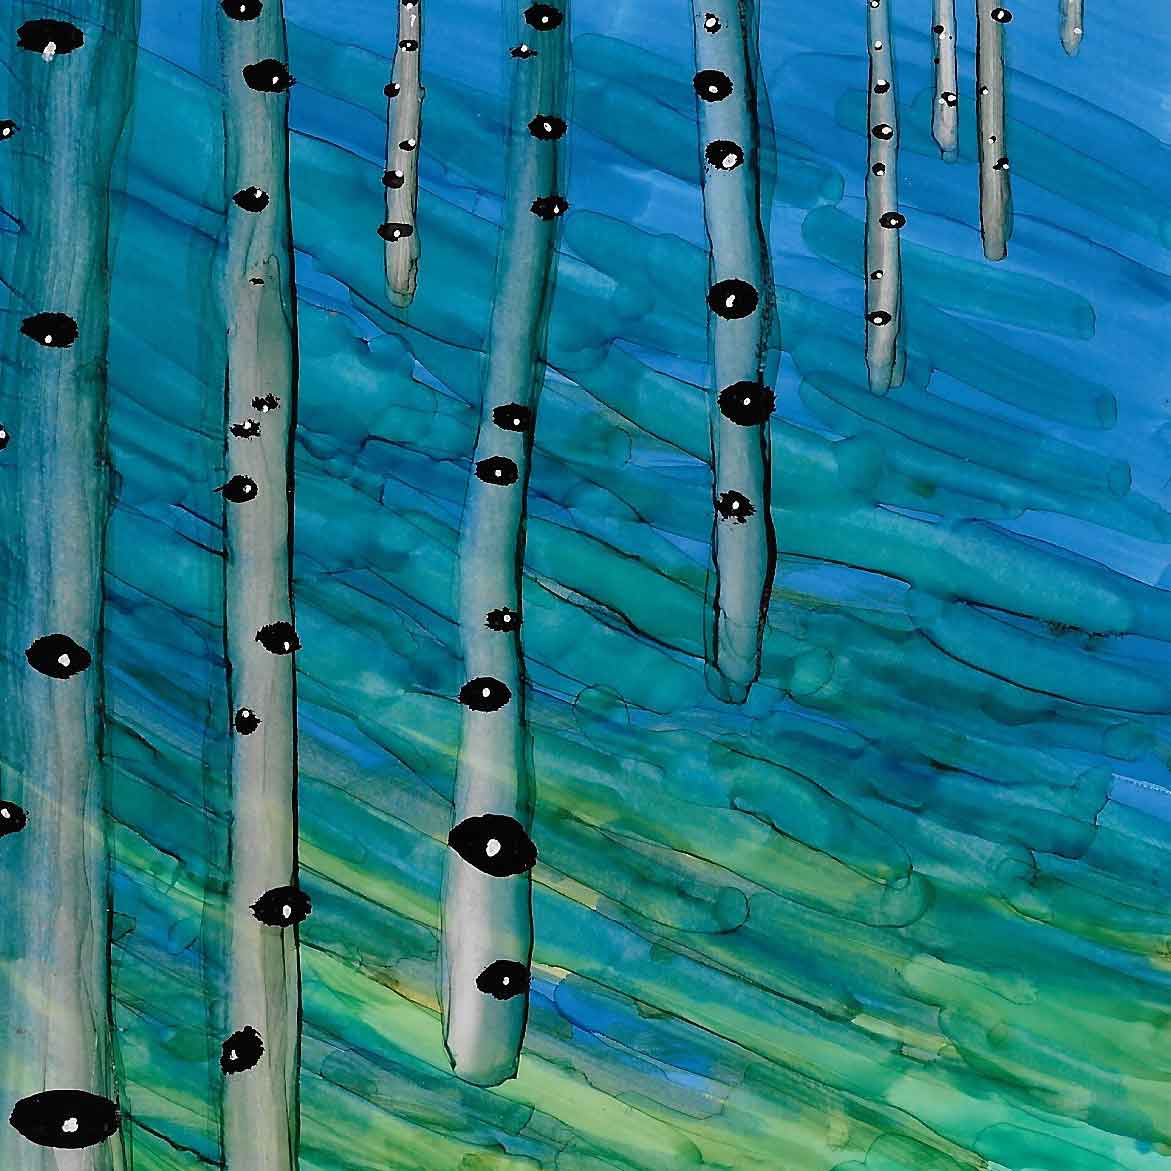 on the birch - original artwork